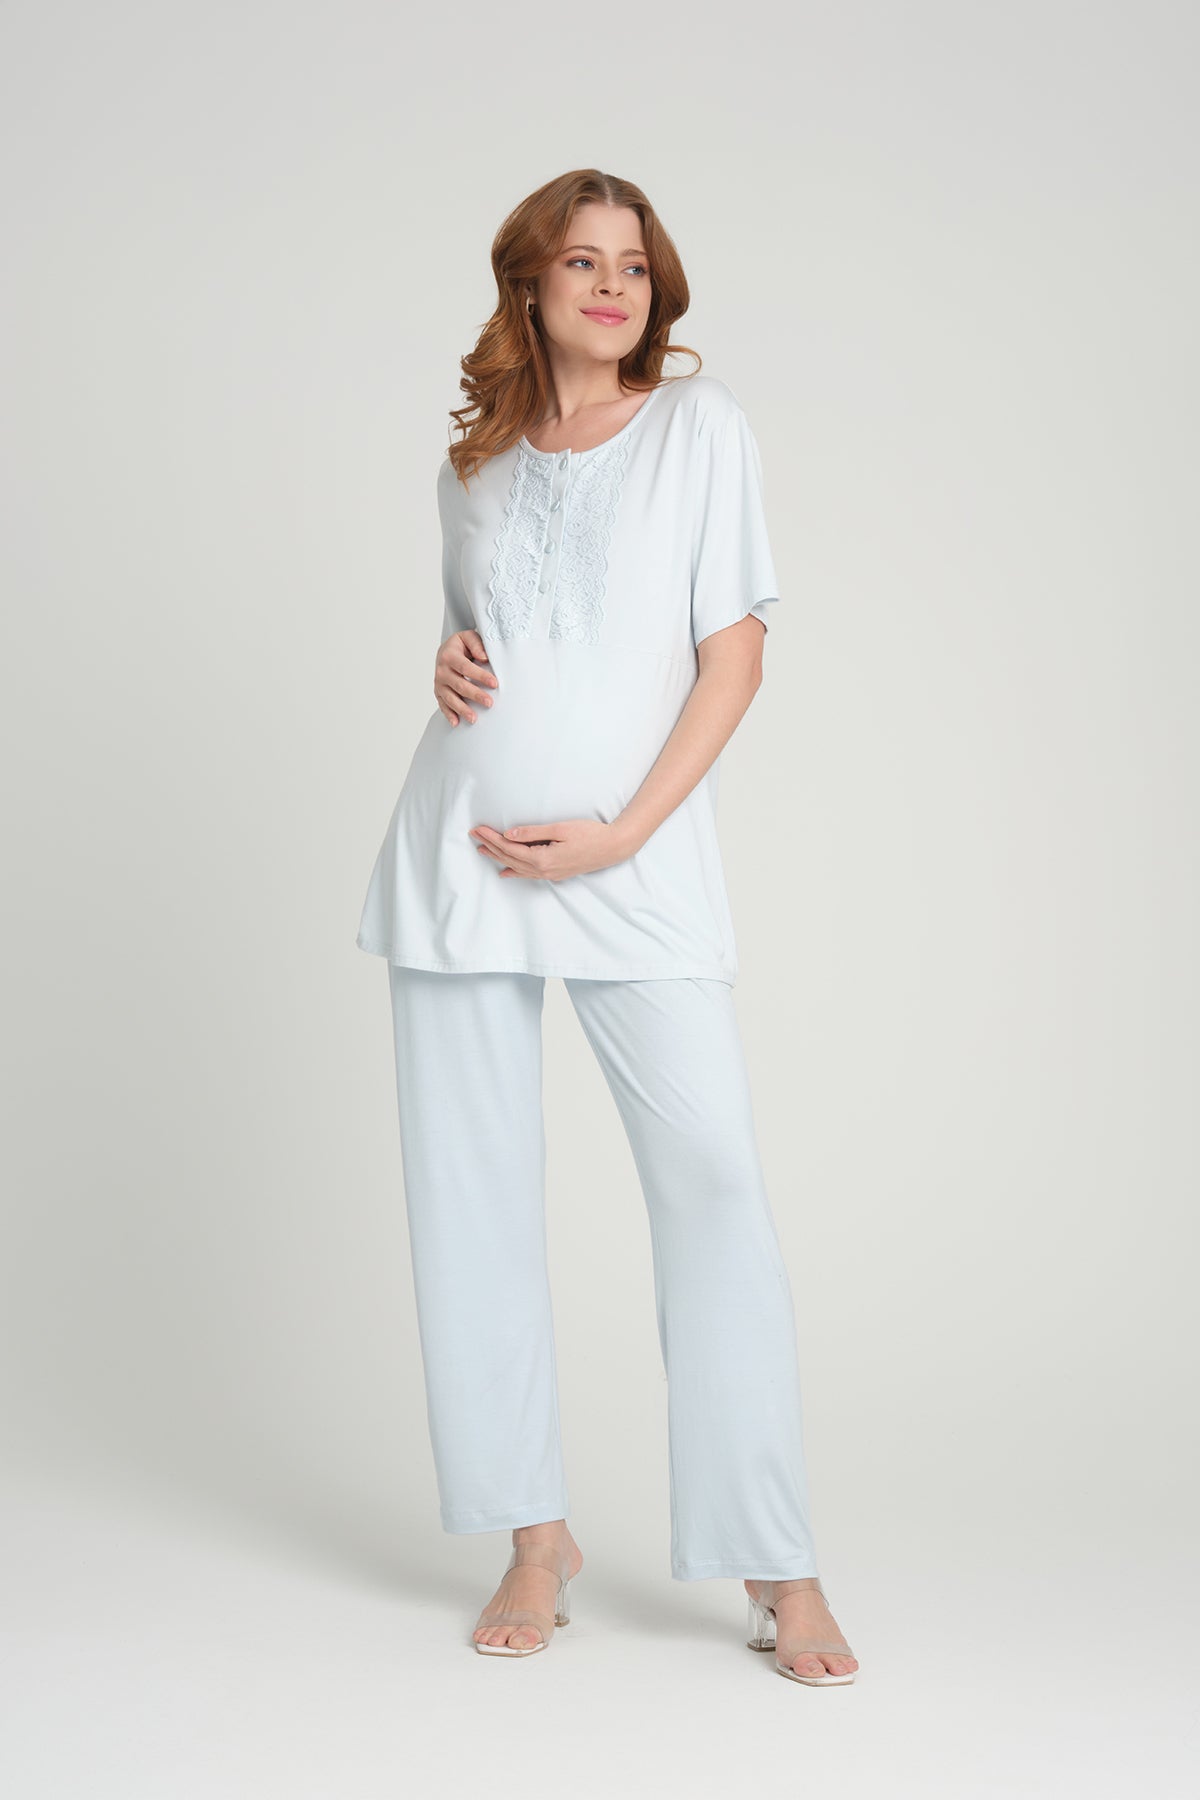 Lace Detailed 3-Pieces Maternity & Nursing Pajamas With Robe Blue - 209